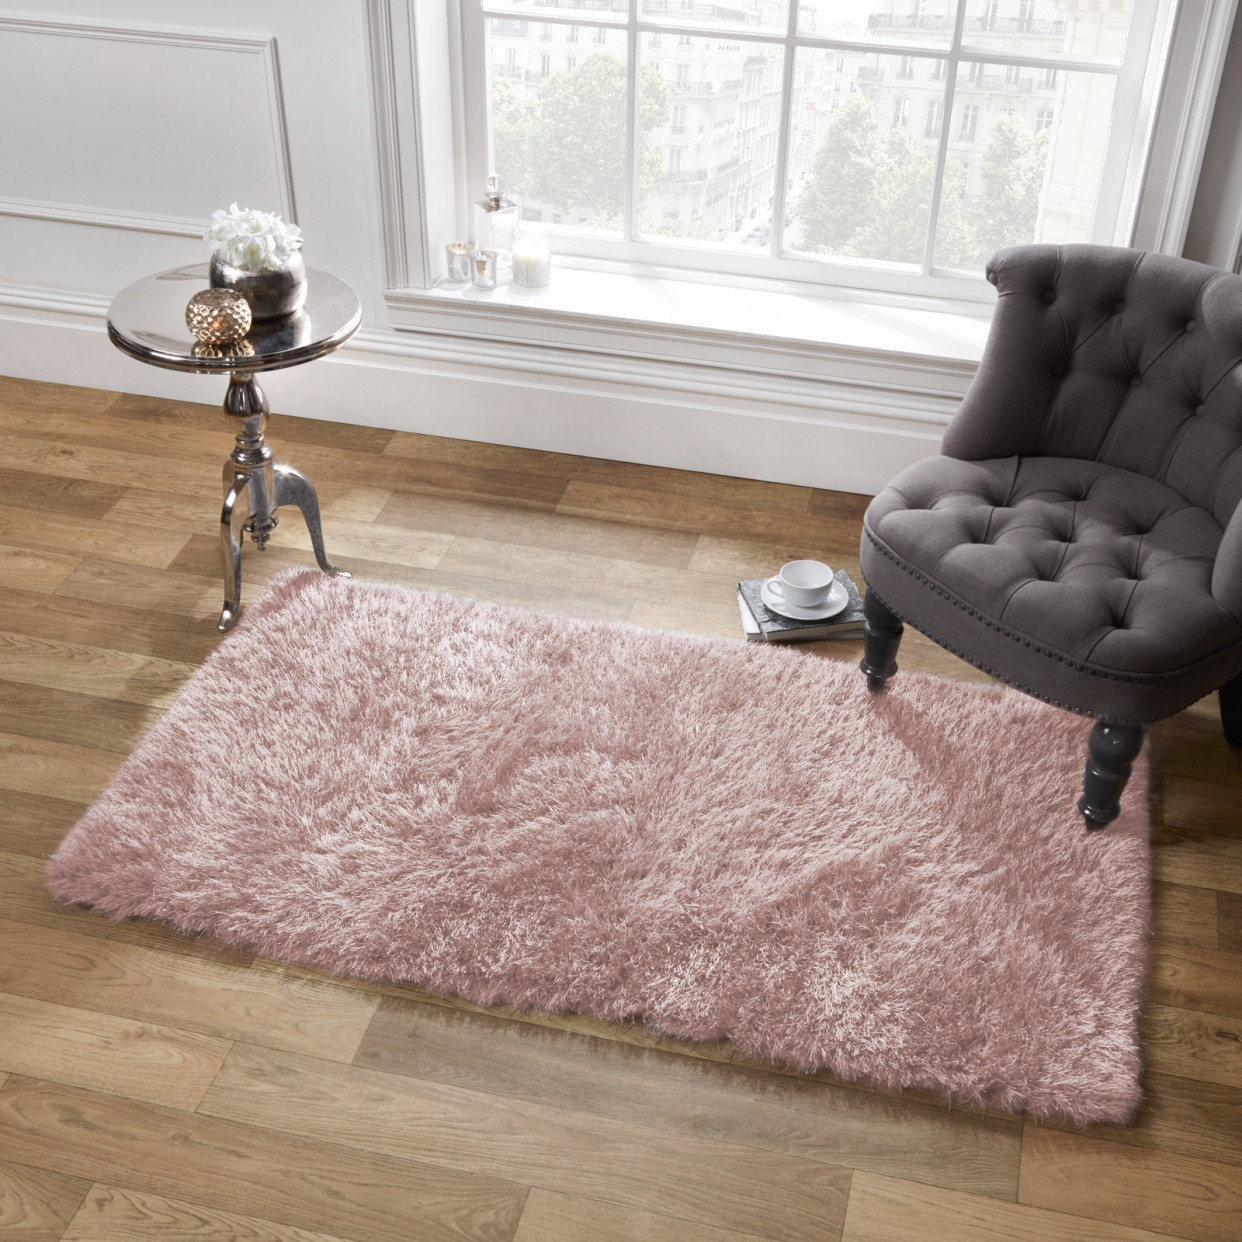 Sienna Large Shaggy Soft Floor Rug 5cm Pile, Blush Pink - 80 x 150cm>